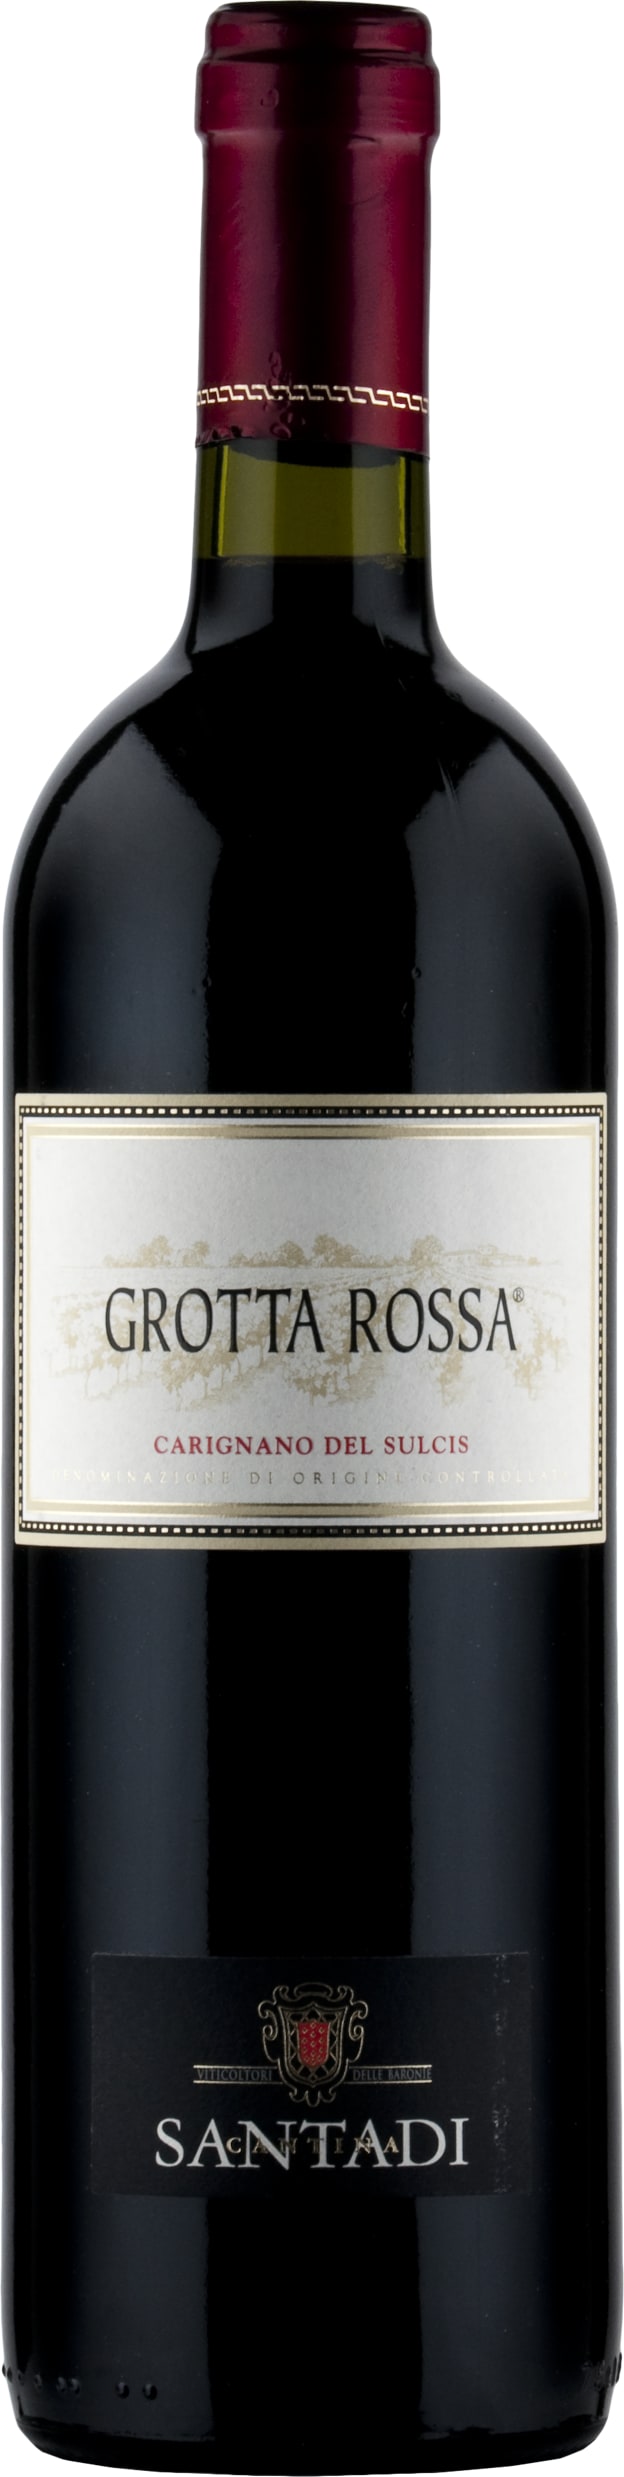 Santadi Carignano del Sulcis, Grotta Rossa 2021 75cl - Buy Santadi Wines from GREAT WINES DIRECT wine shop